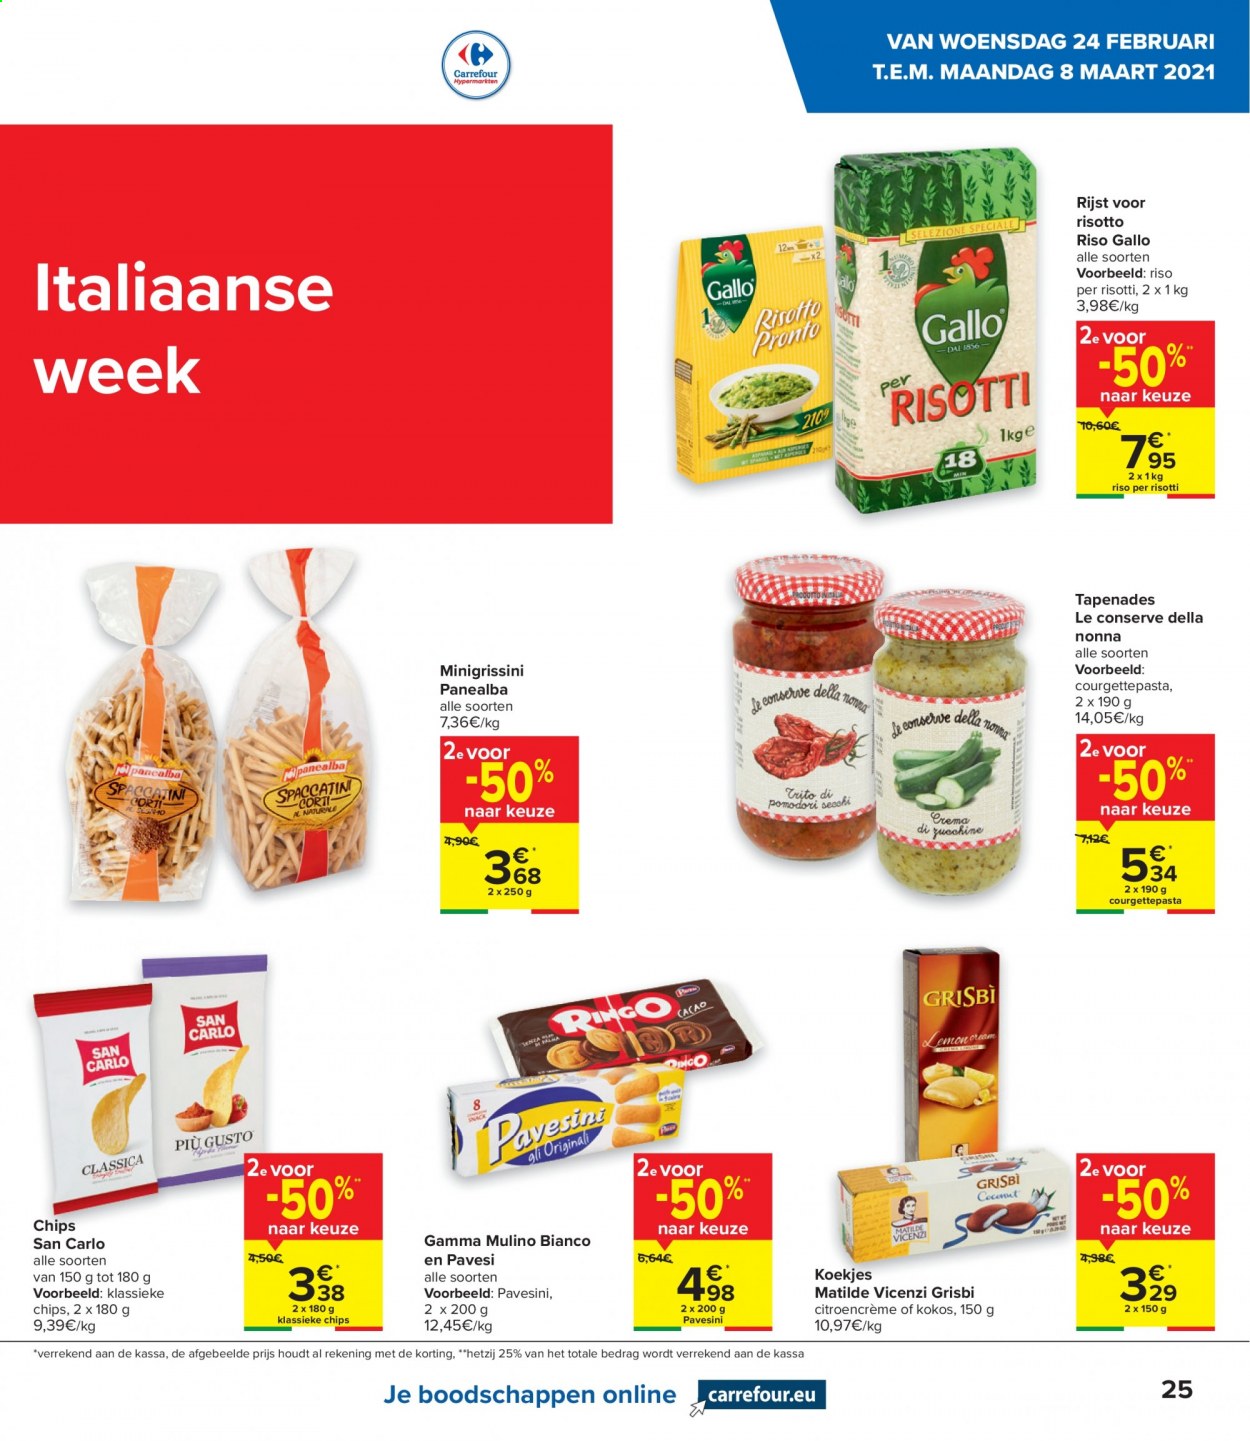 thumbnail - Carrefour hypermarkt-aanbieding - 24/02/2021 - 08/03/2021 -  producten in de aanbieding - koekjes, rijst, chips, risotto, Gamma. Pagina 5.